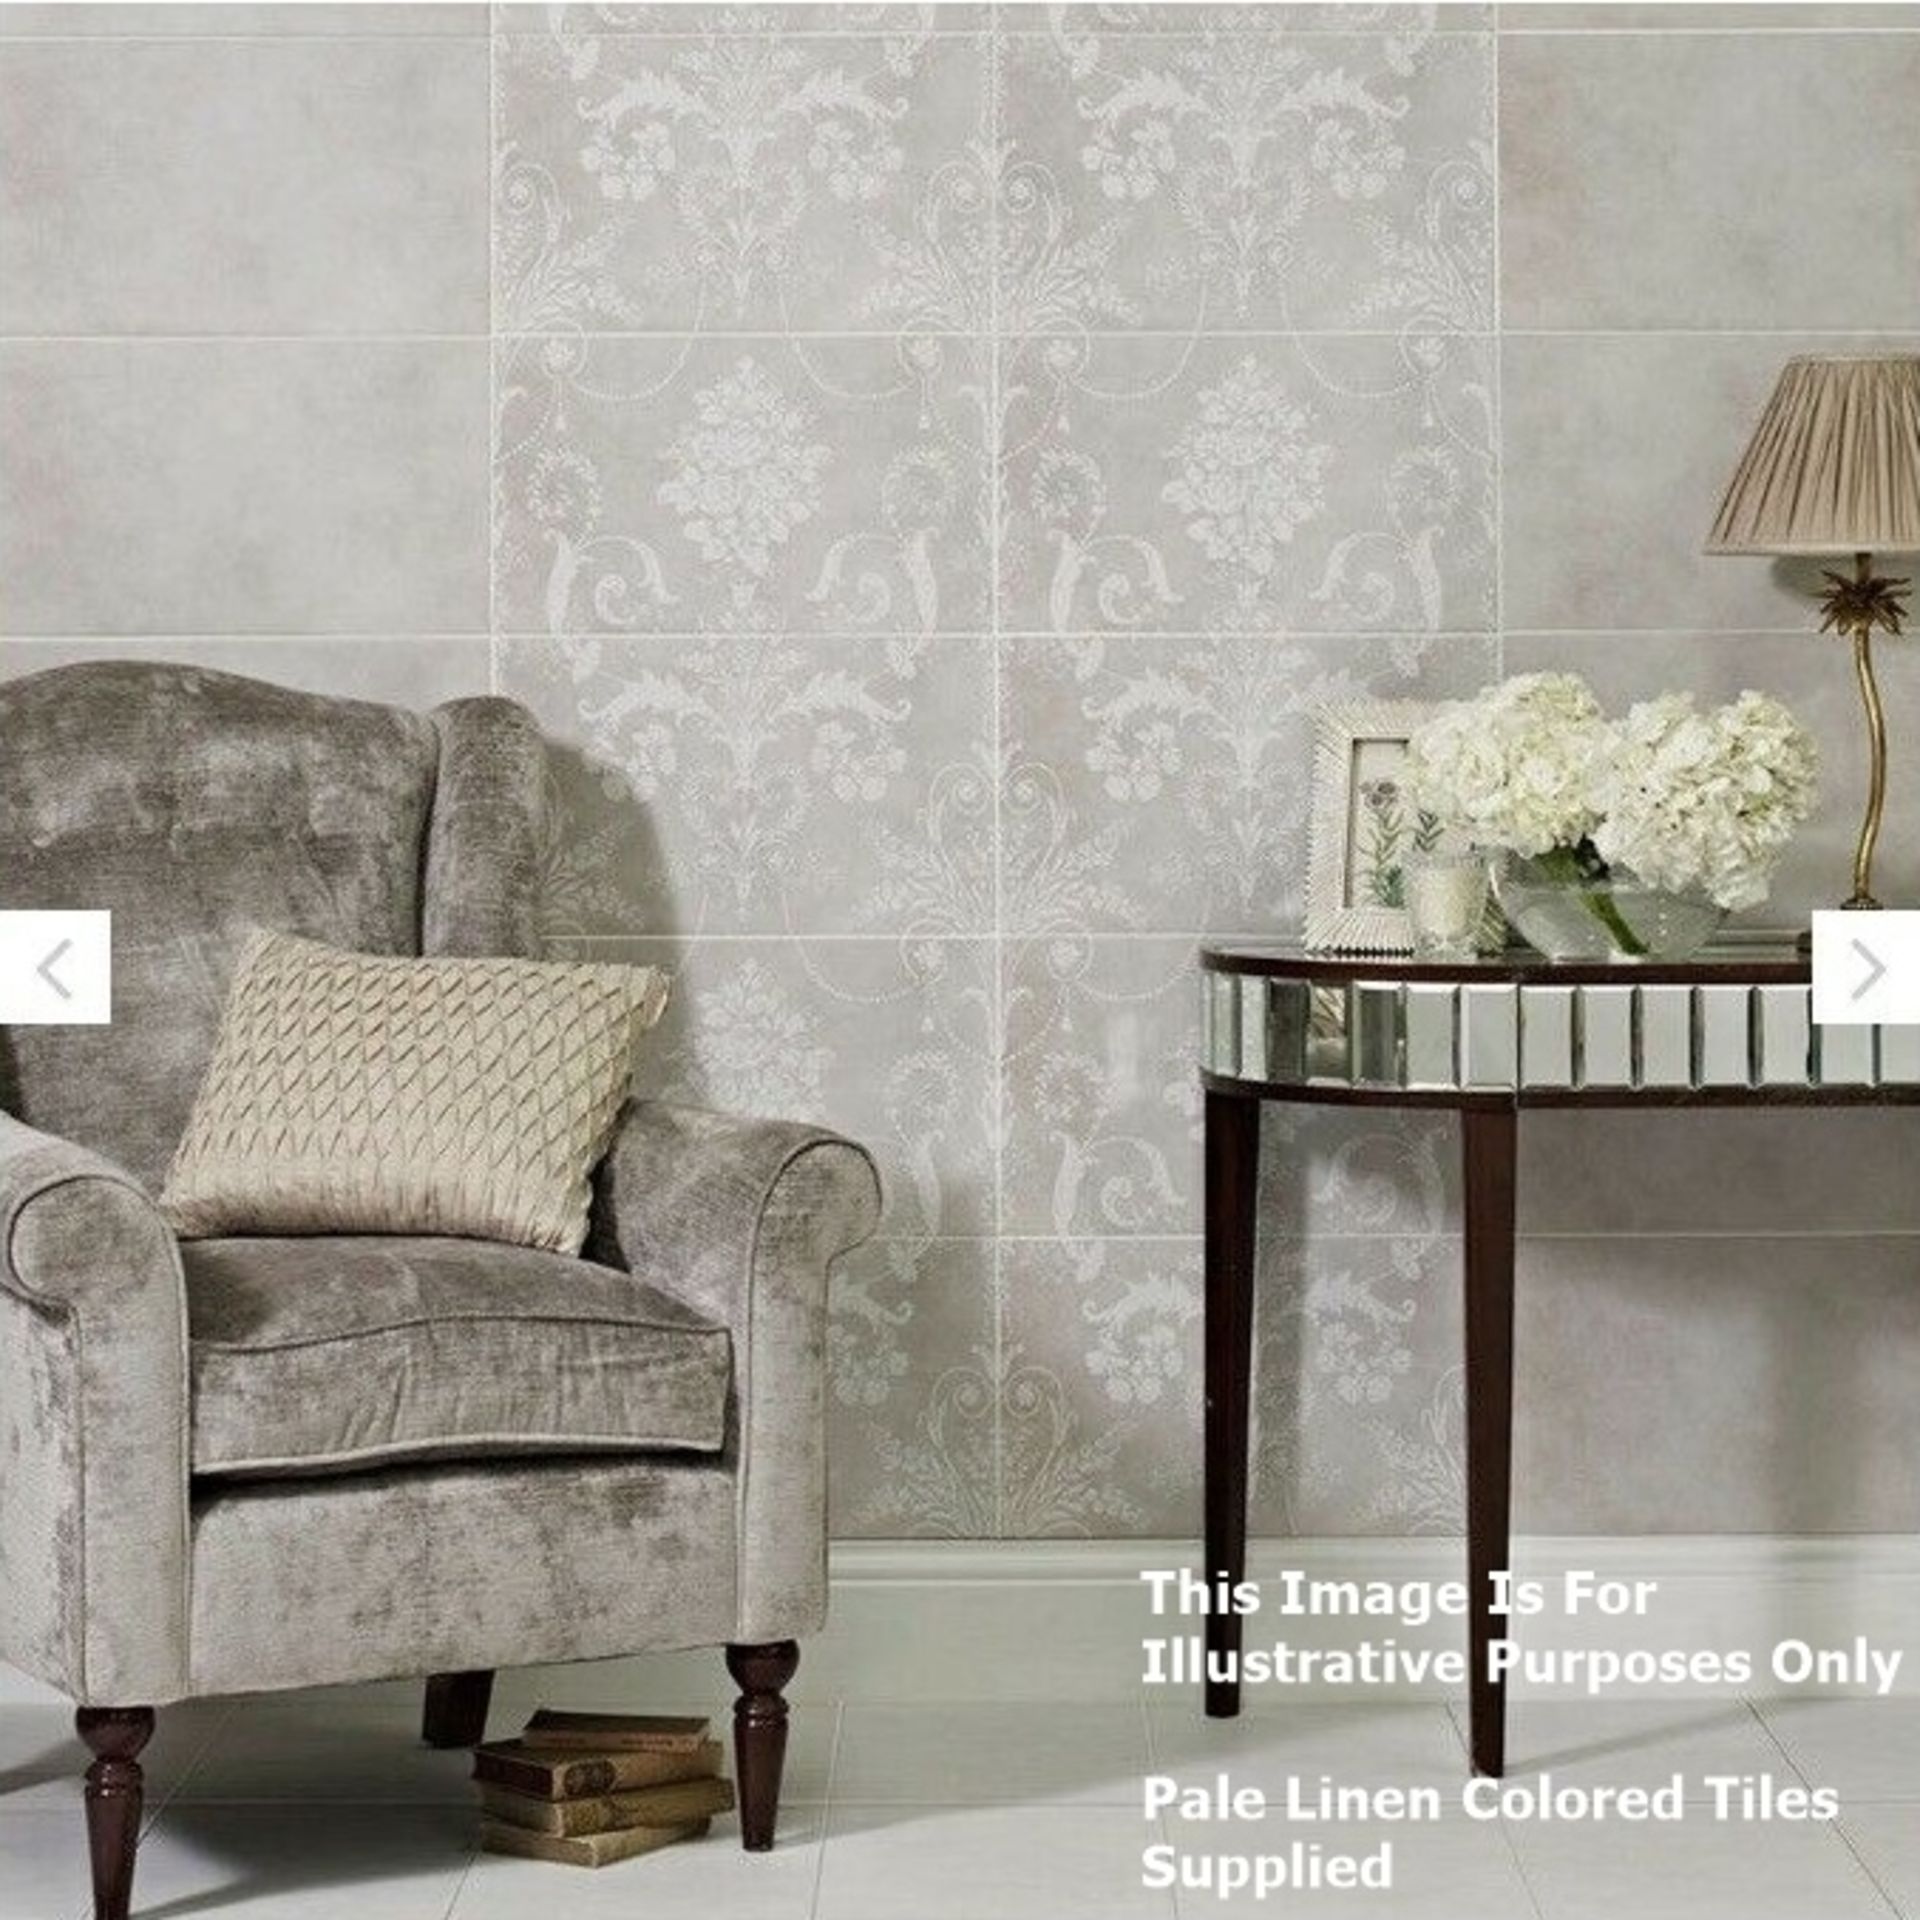 24 Packs Of Laura Ashley Josette Pale Linen A & B Wall Tiles (21.6 Sq M) - Ref BD0020